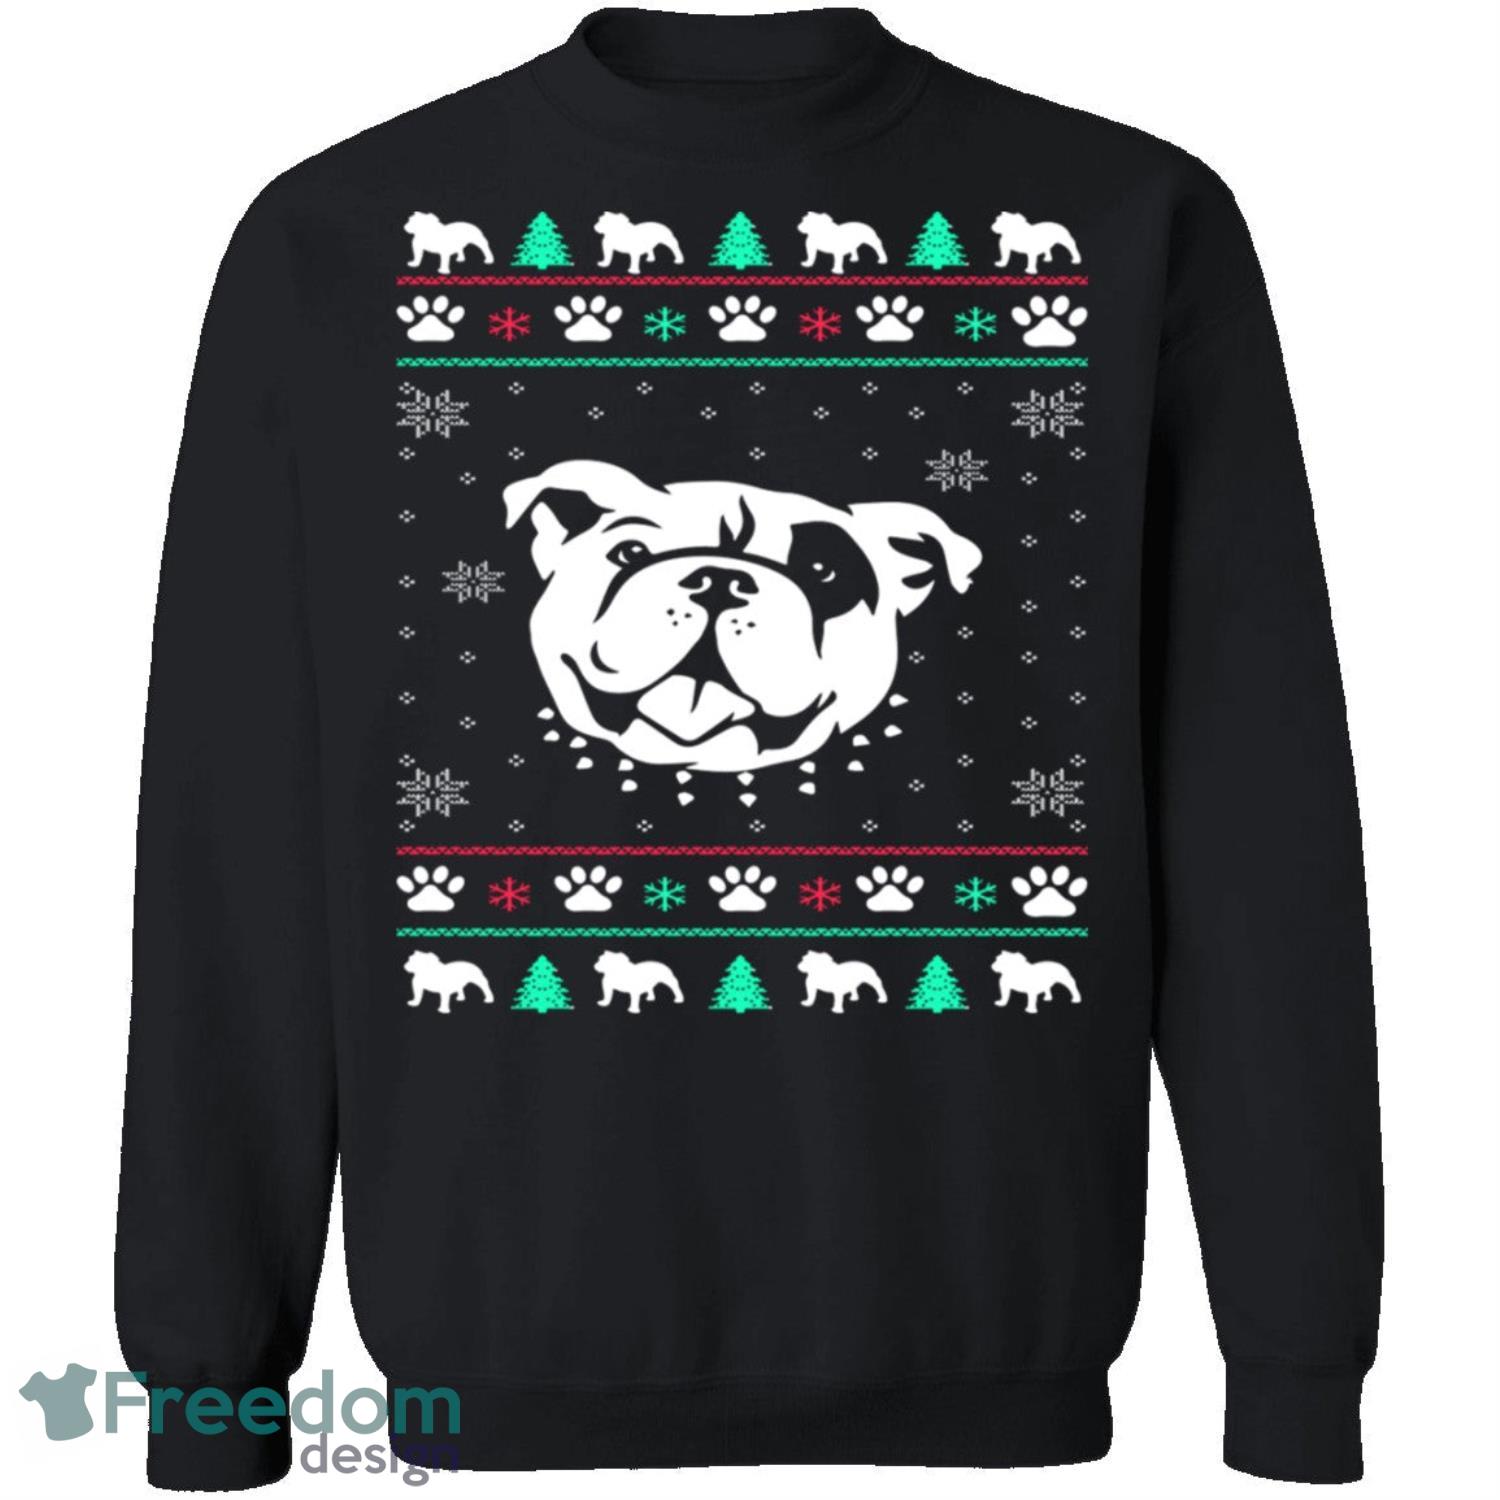 Bulldog Knitting Pattern Ugly Christmas Sweatshirt - bulldog-knitting-pattern-ugly-christmas-sweatshirt-1